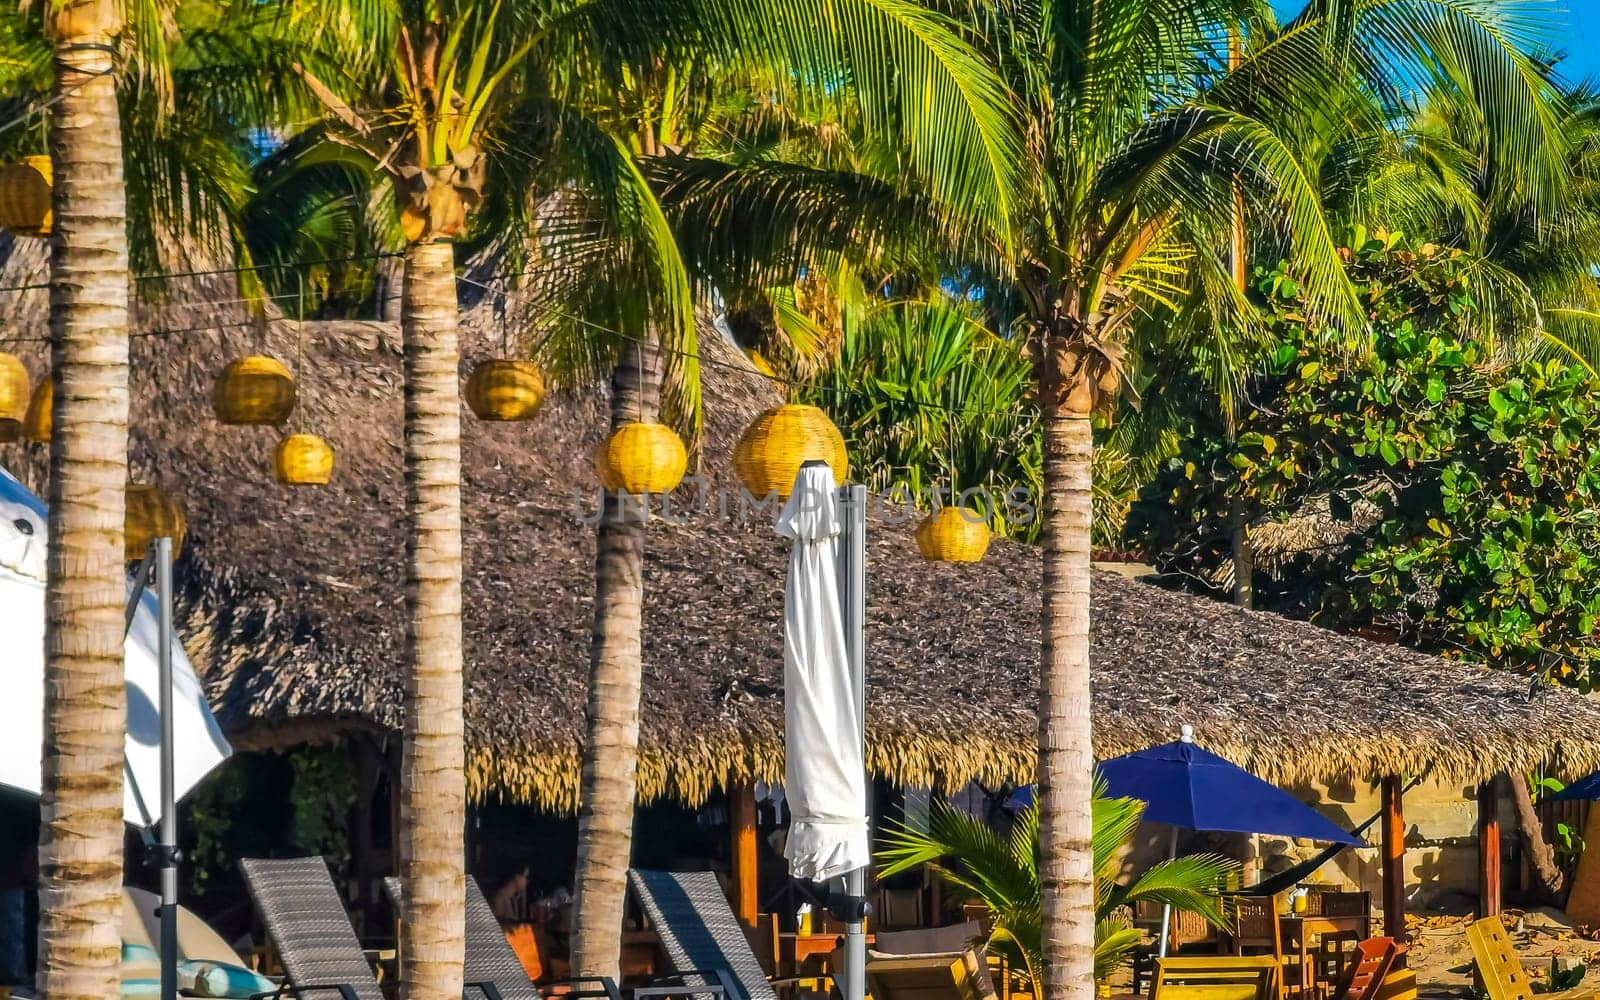 Restaurant hotel palm trees promenade bar on beach Puerto Escondido. by Arkadij